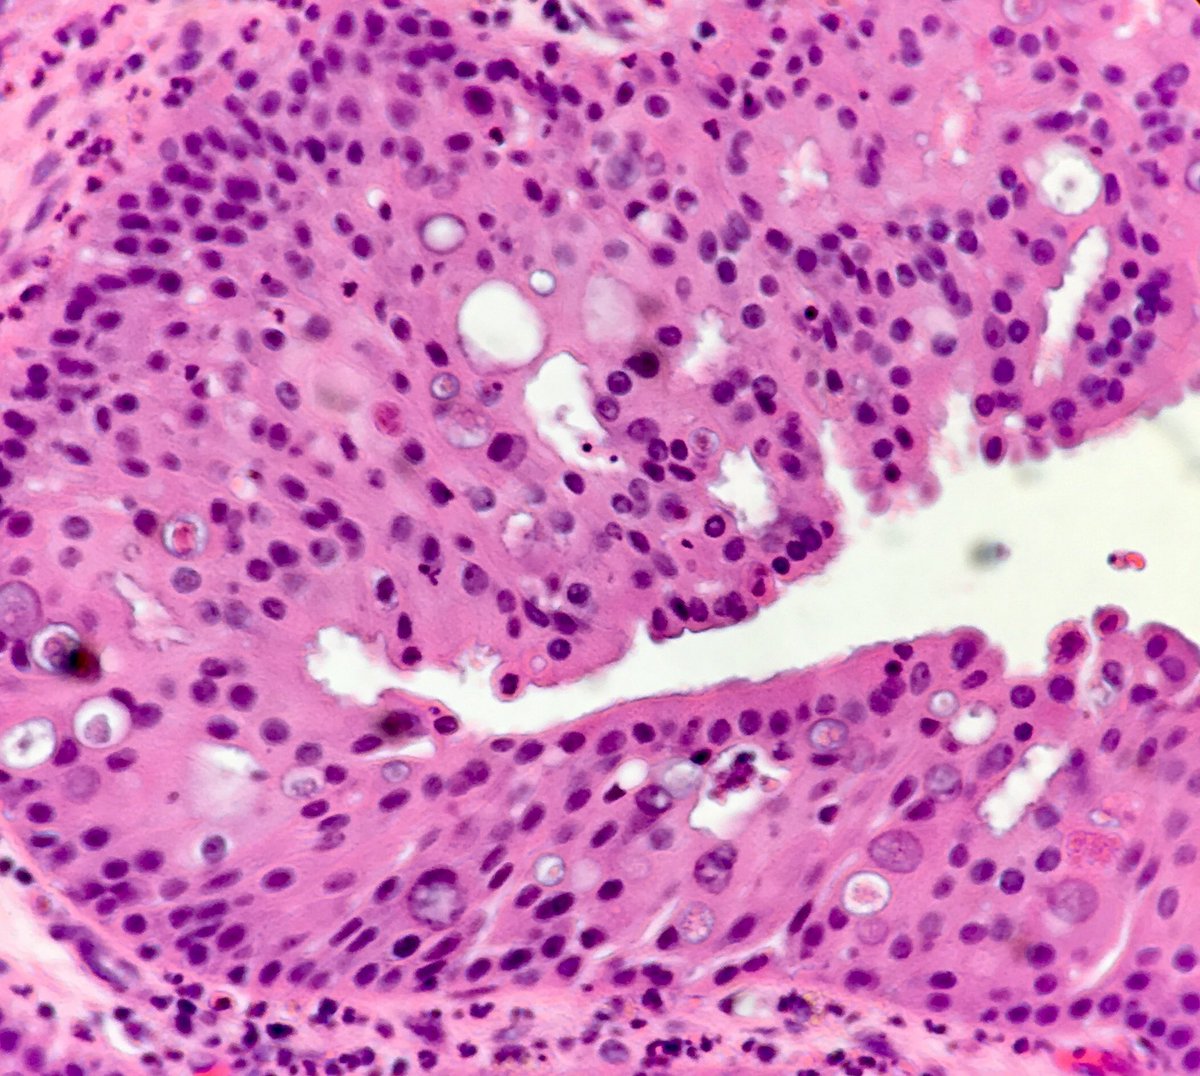 Oncocytic inverted papilloma - Oncocytic papilloma nasal cavity